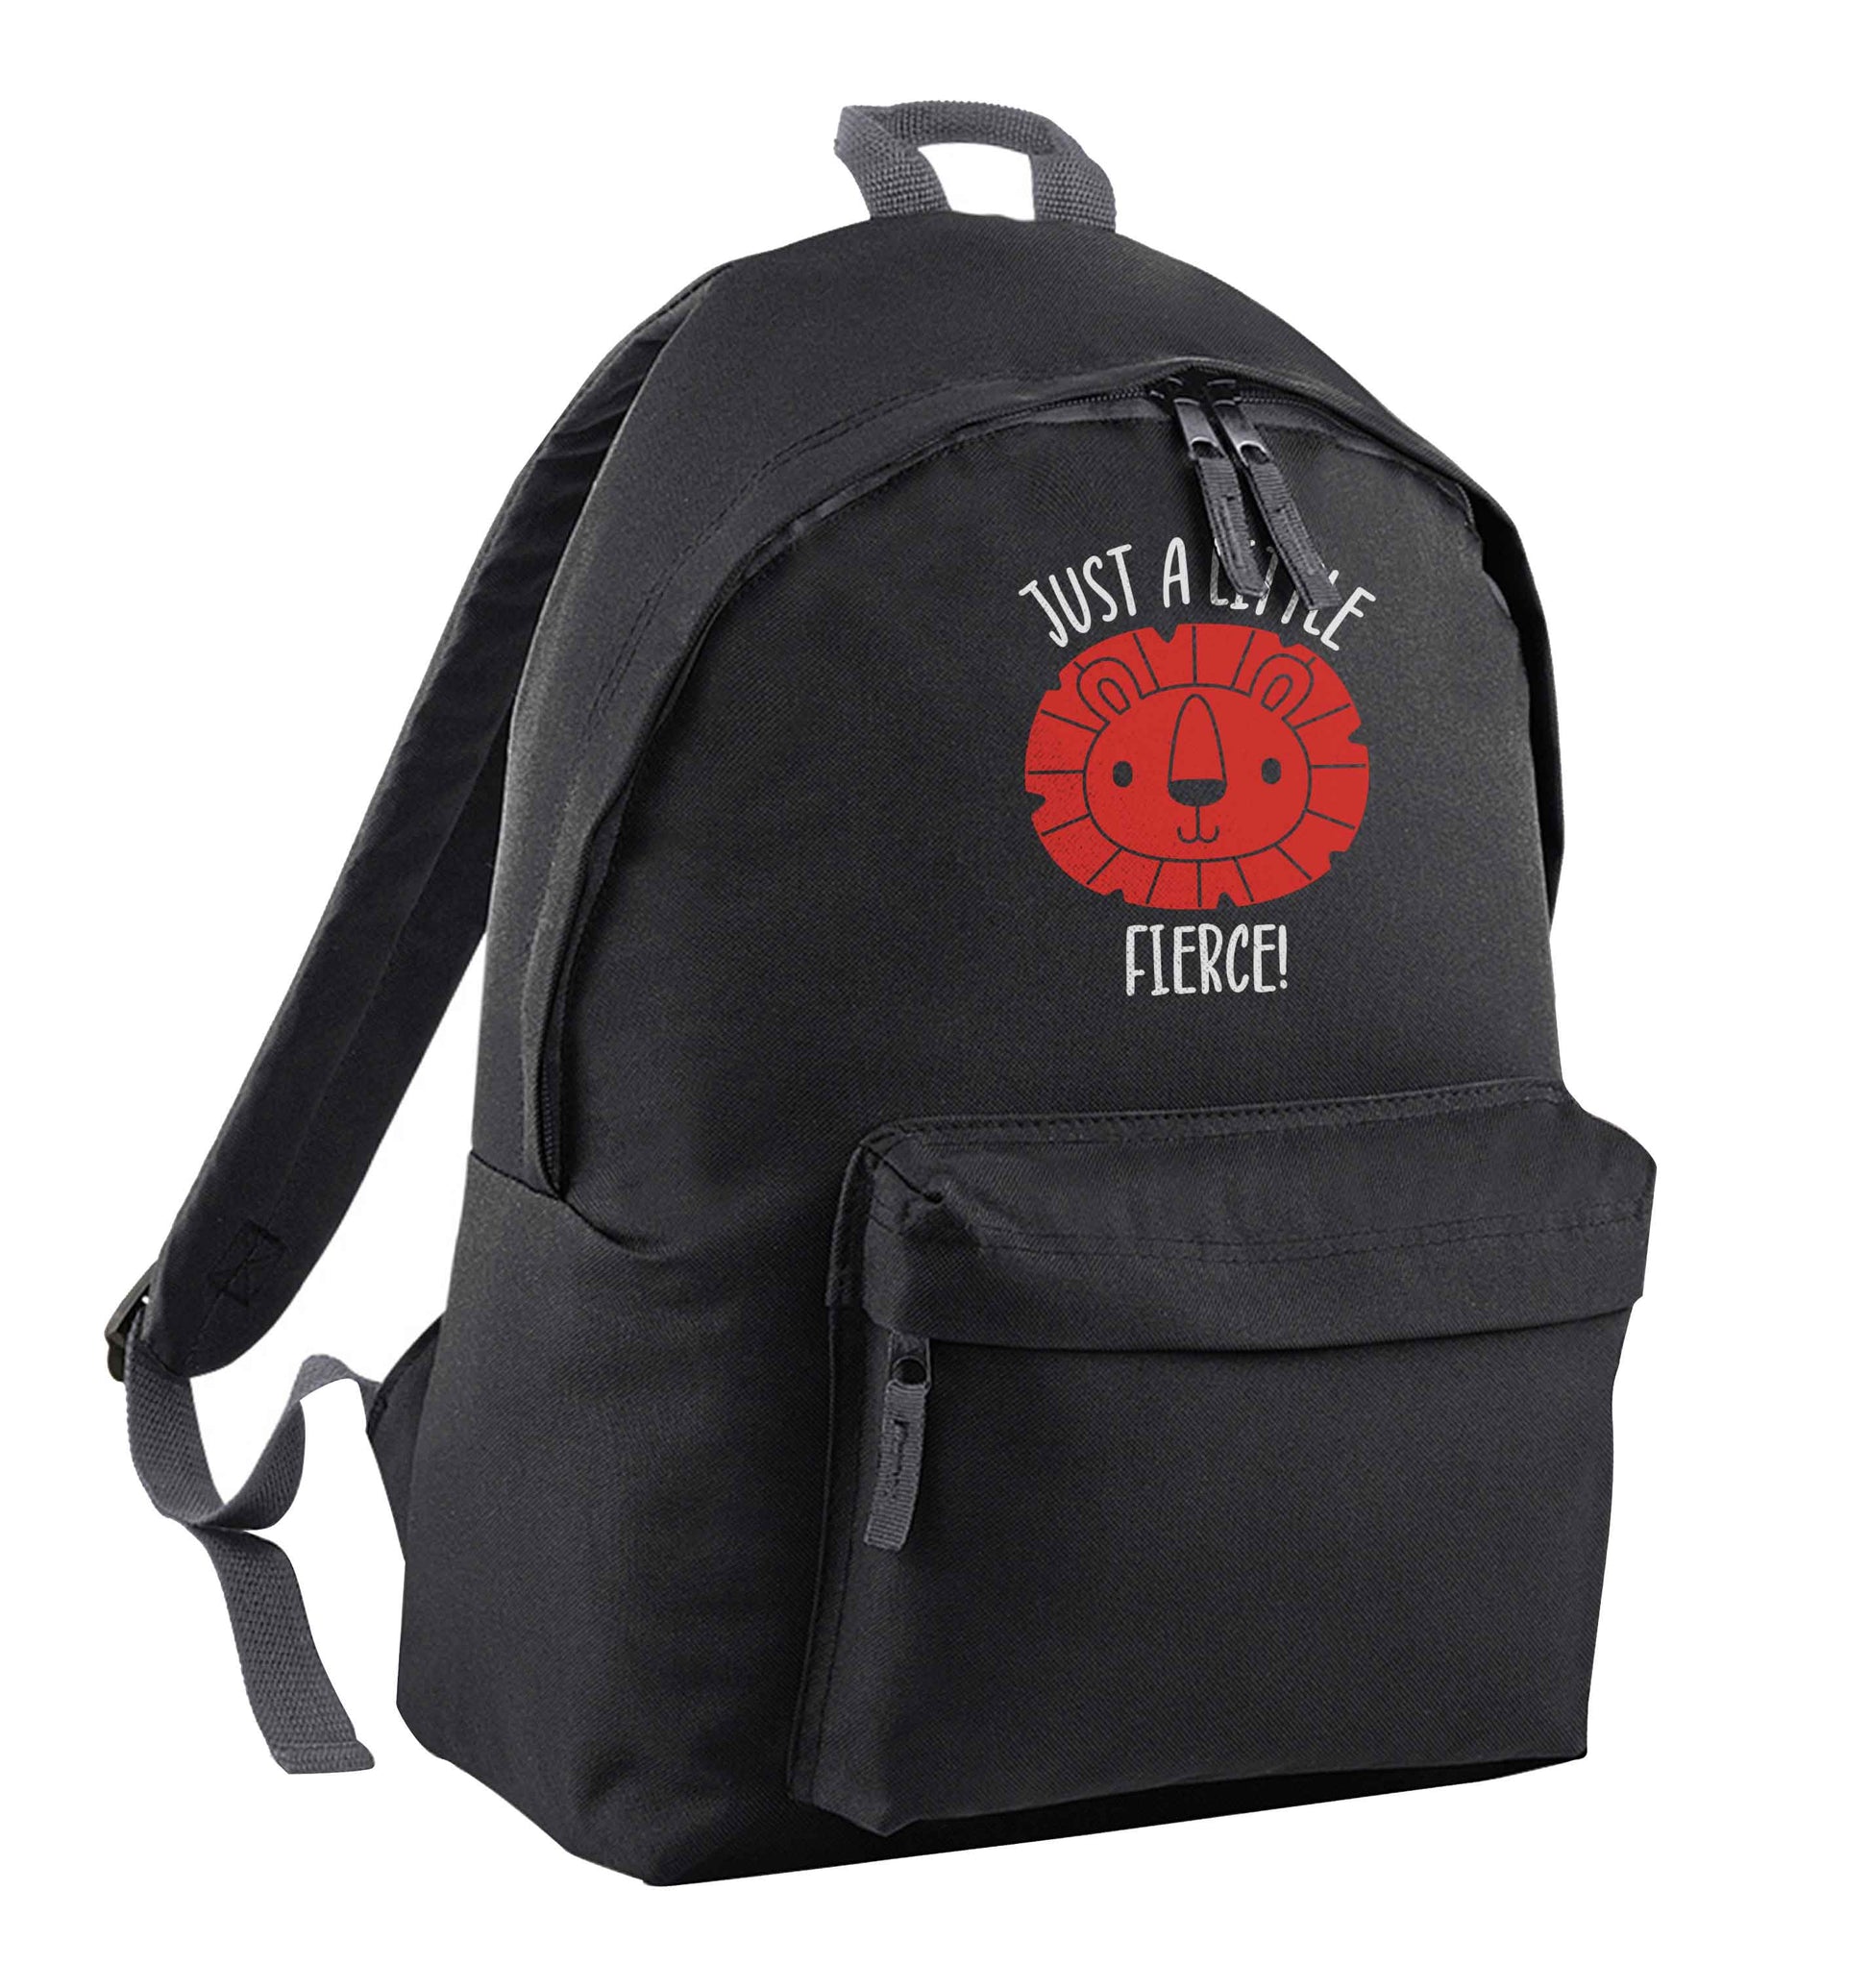 Just a little fierce black children's backpack